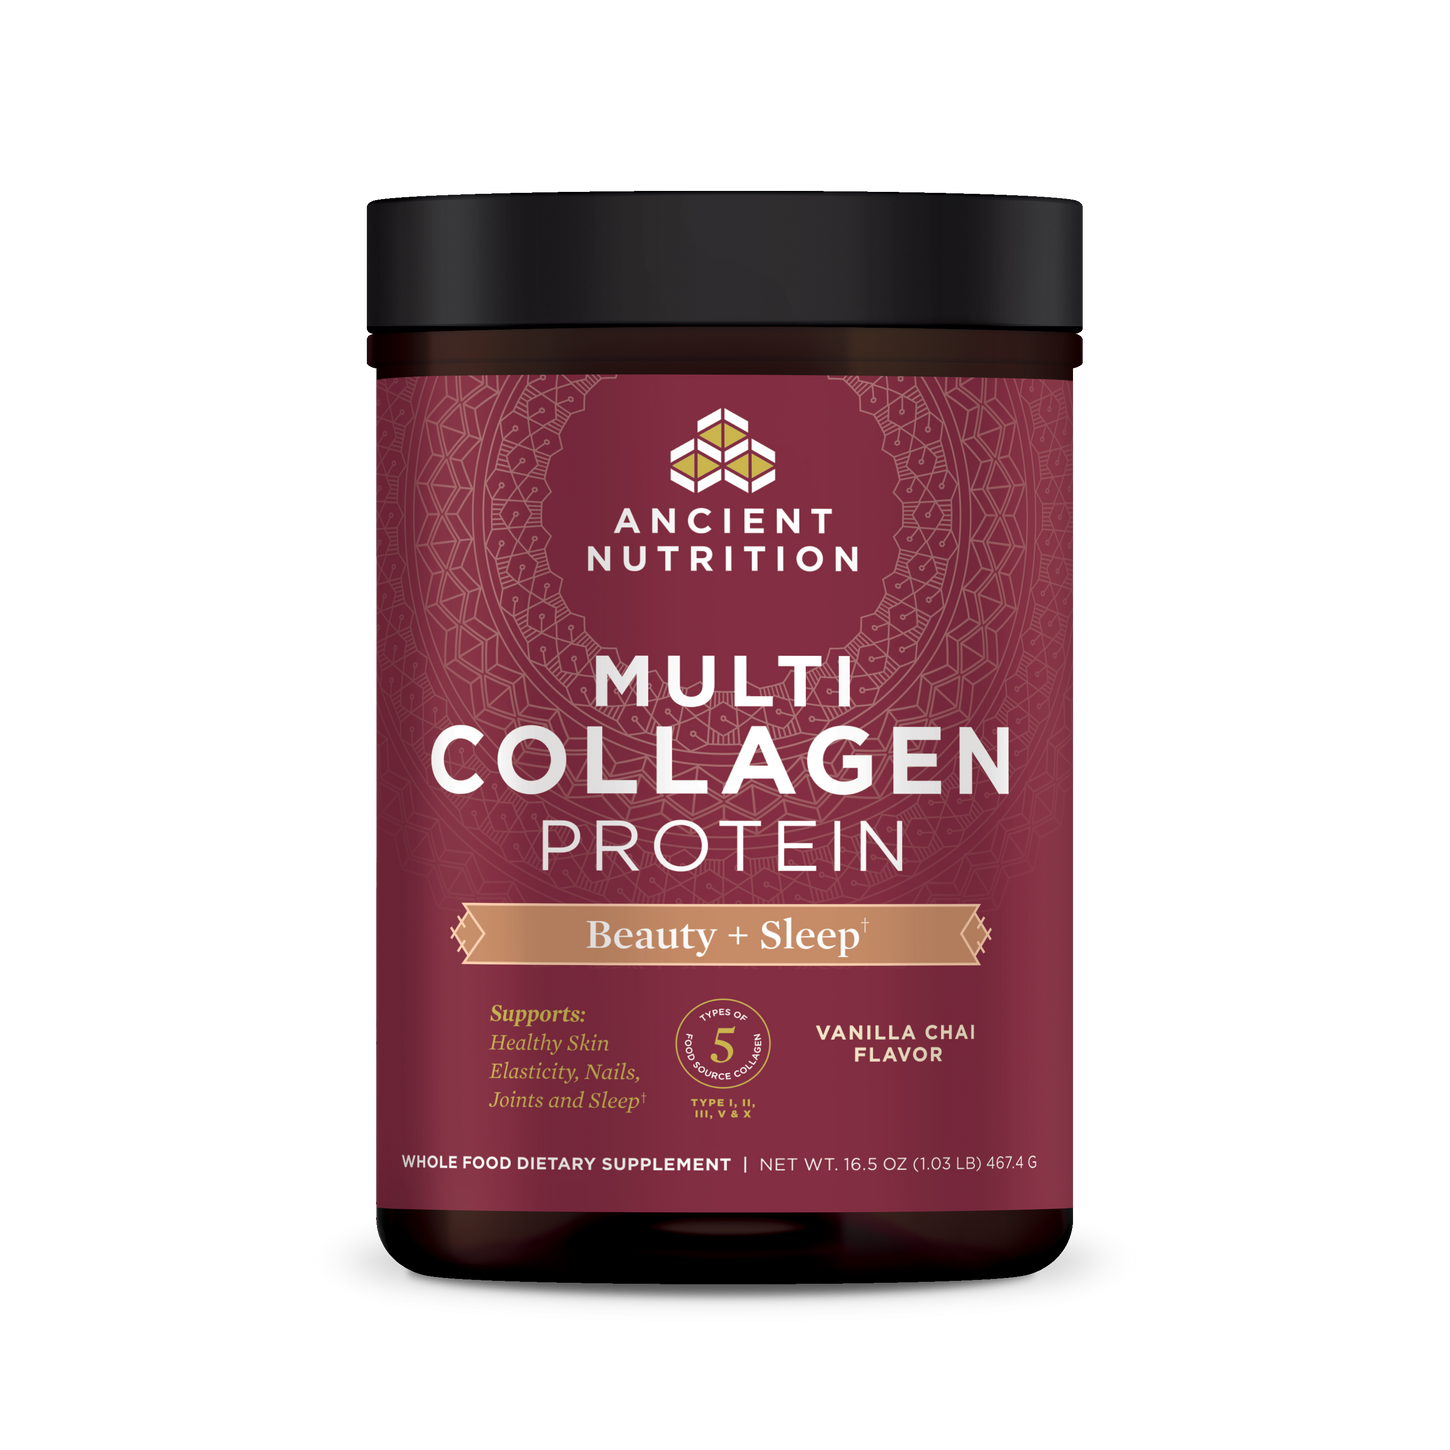 multi collagen protein beauty sleep powder front of bottle image